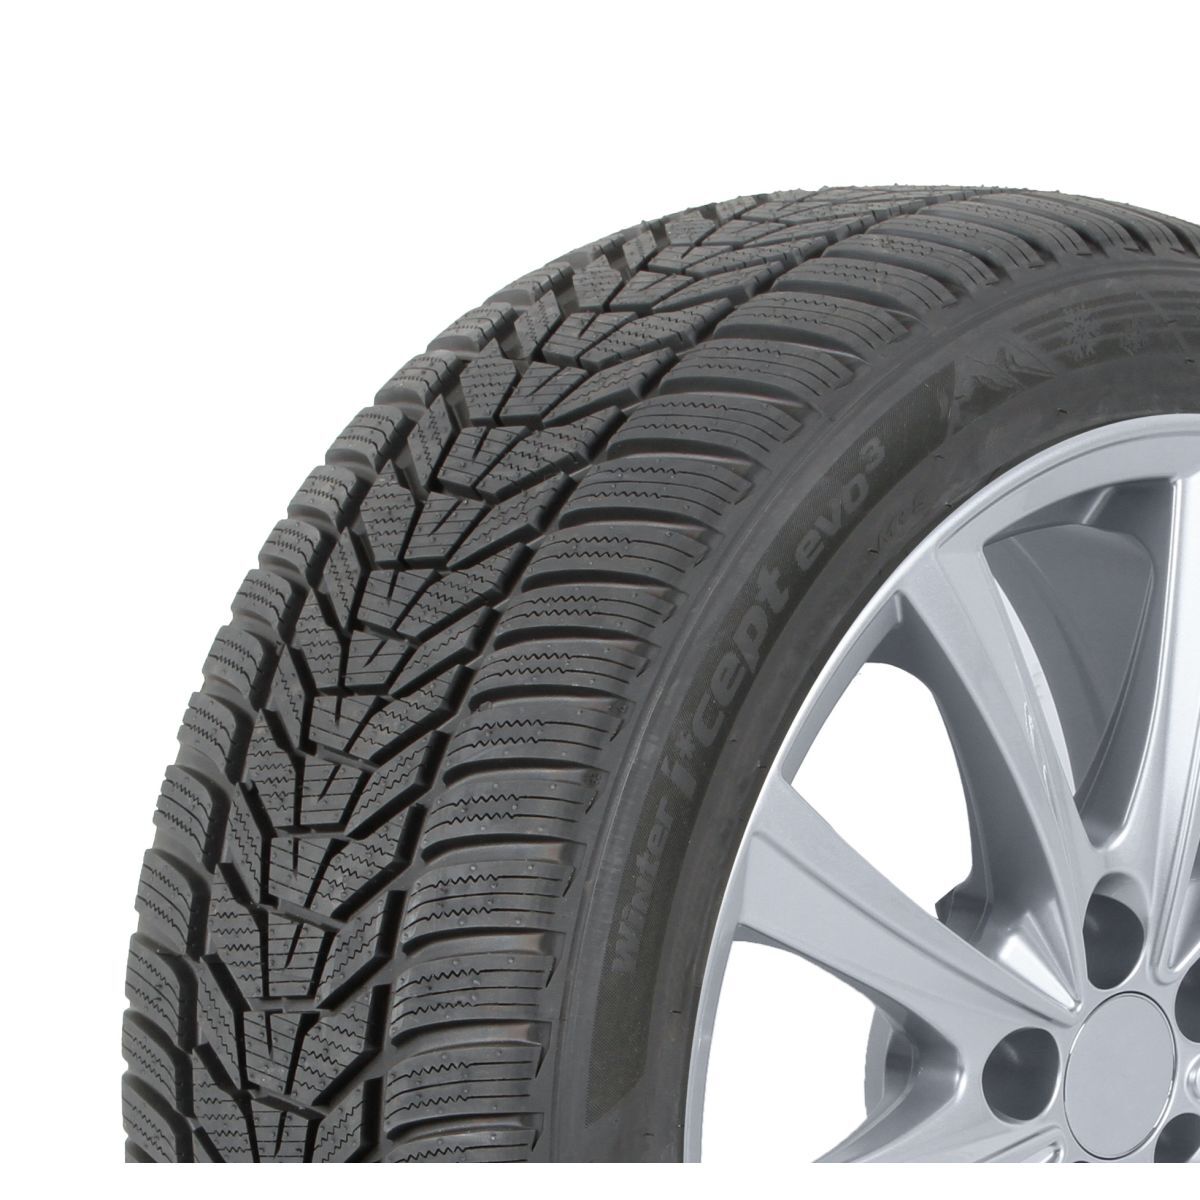 Neumáticos de invierno HANKOOK Winter i*cept evo3 W330 265/35R18 XL 97V